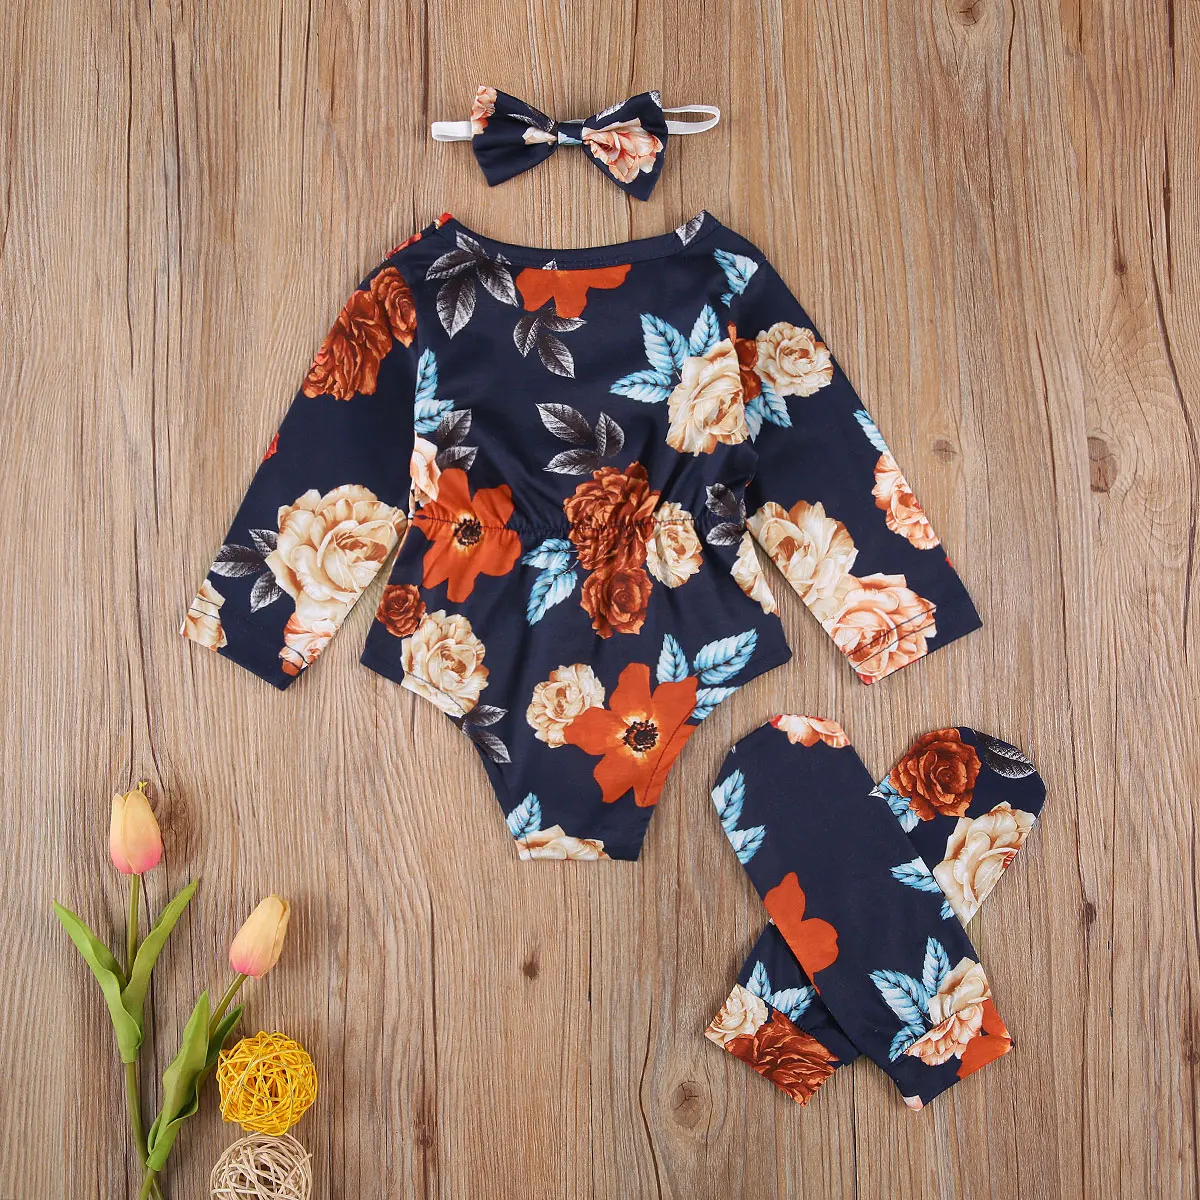 

Pudcoco 2020 Autumn 0-24M Infant Baby Girls 3Pcs Set Floral Print Long Sleeve Bodysuit+Leg Warmers+Headband Toddler Outfit